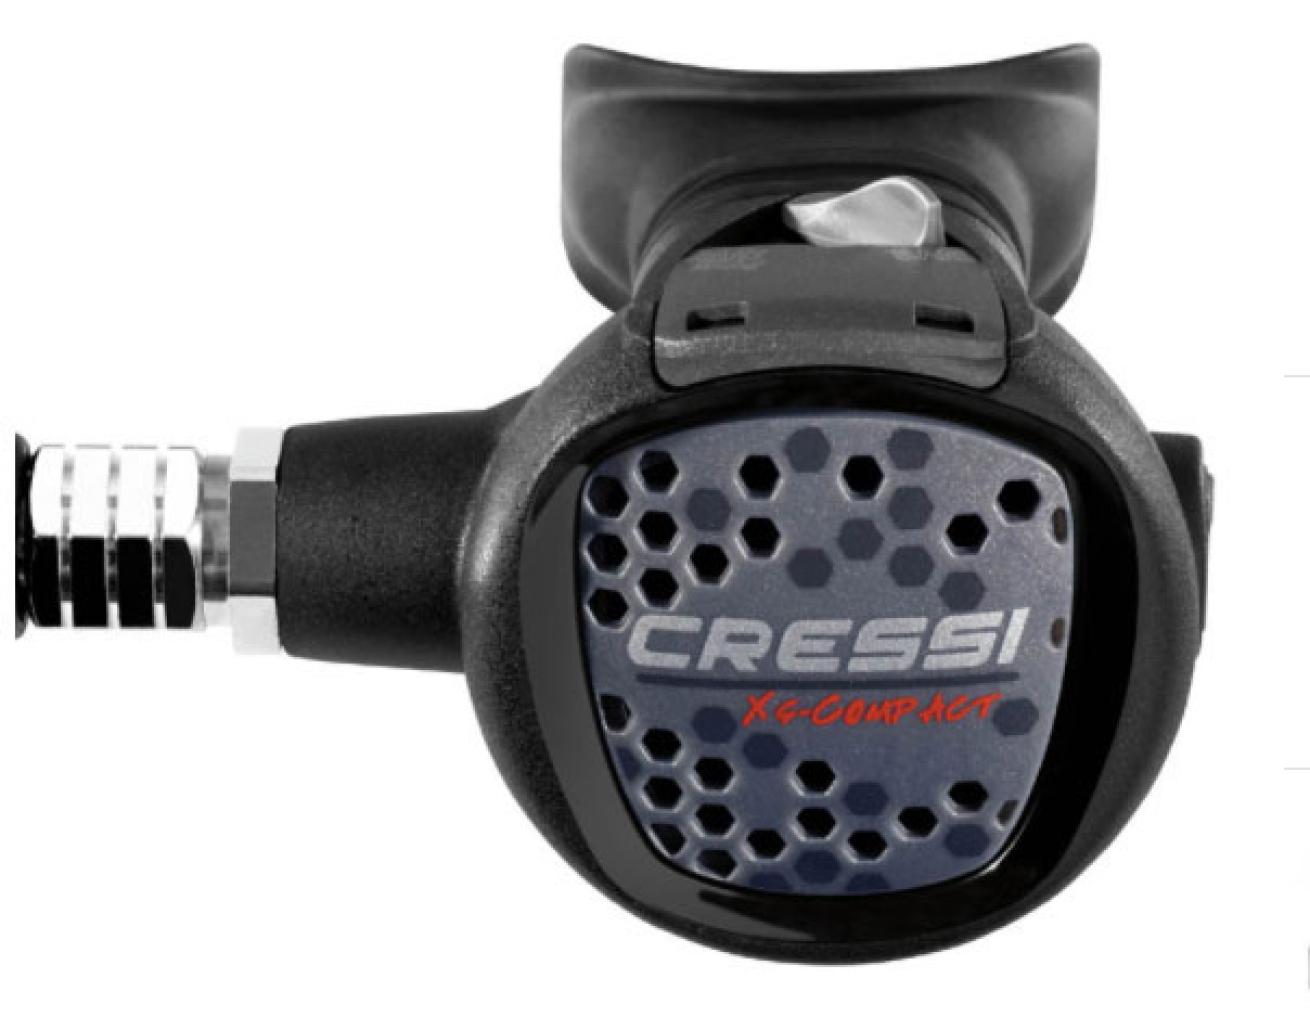 Cressi MC9 Compact